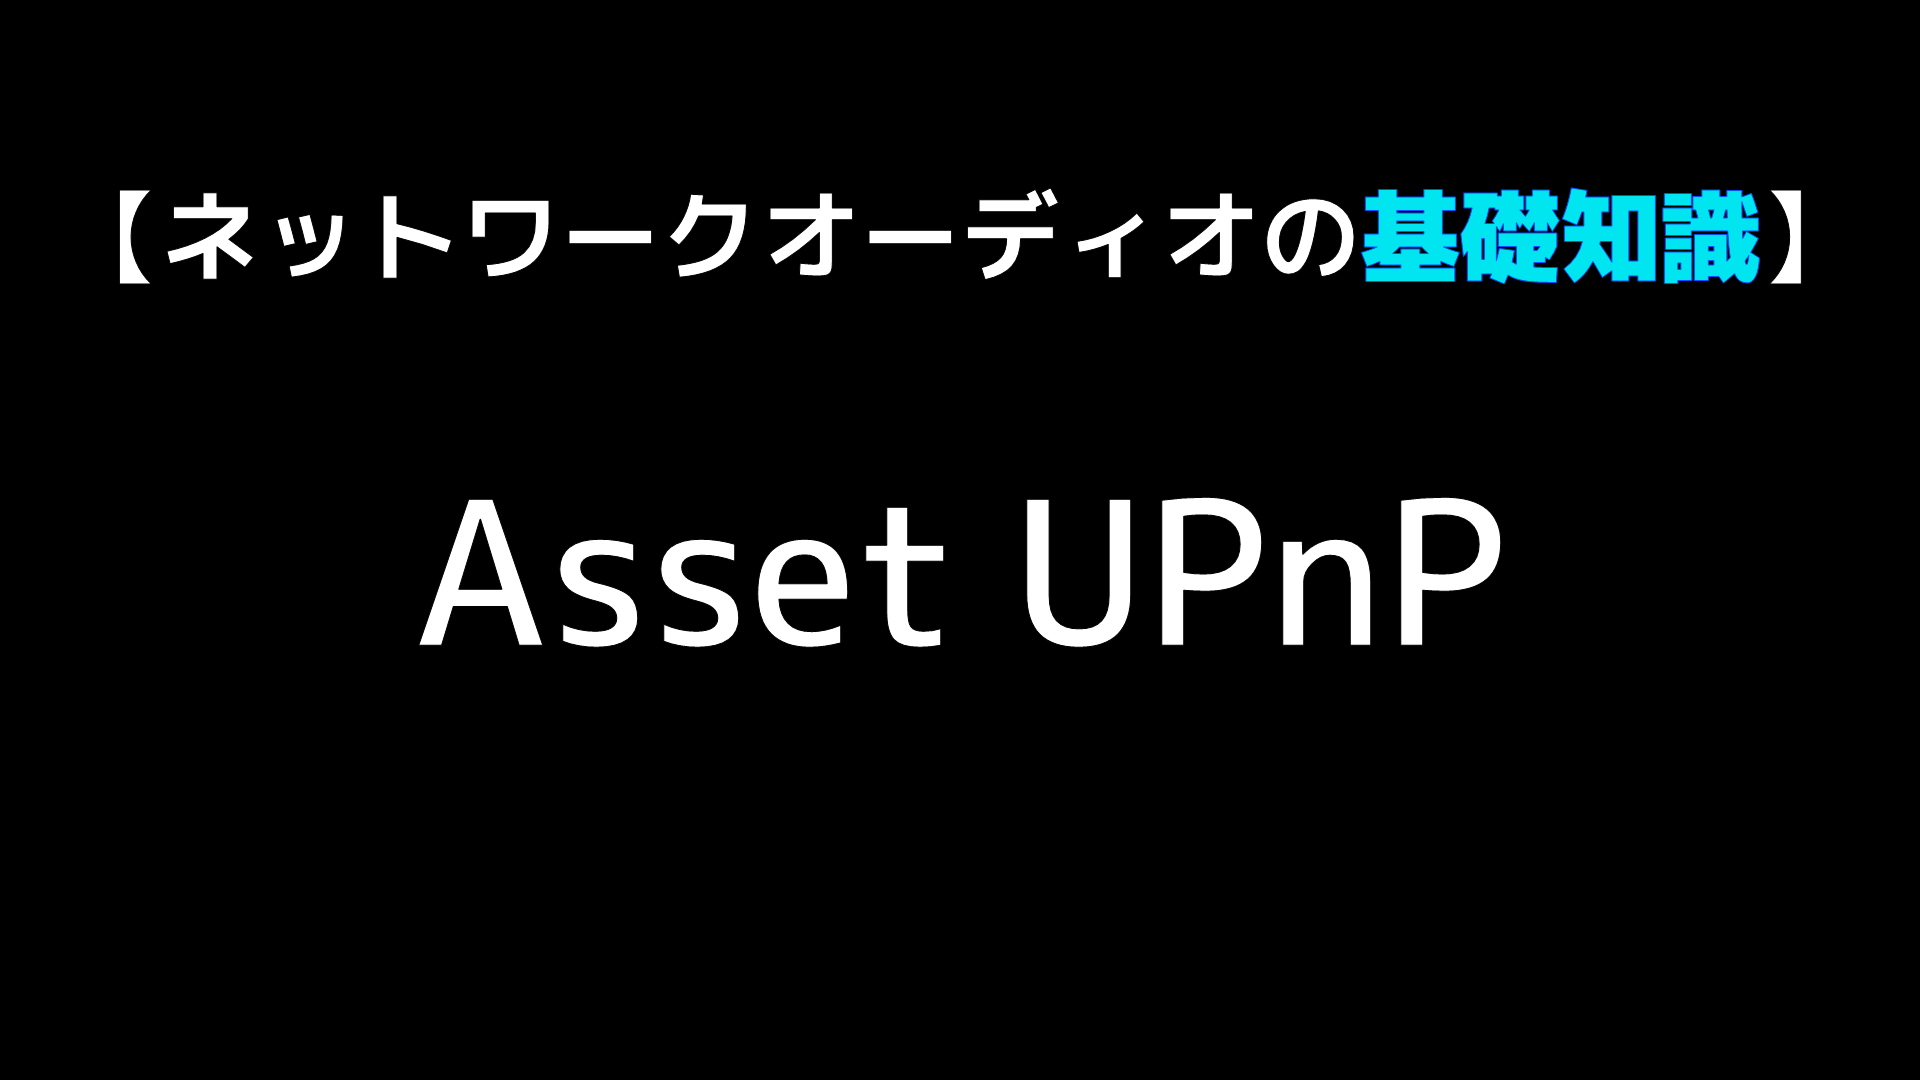 illustrate asset upnp